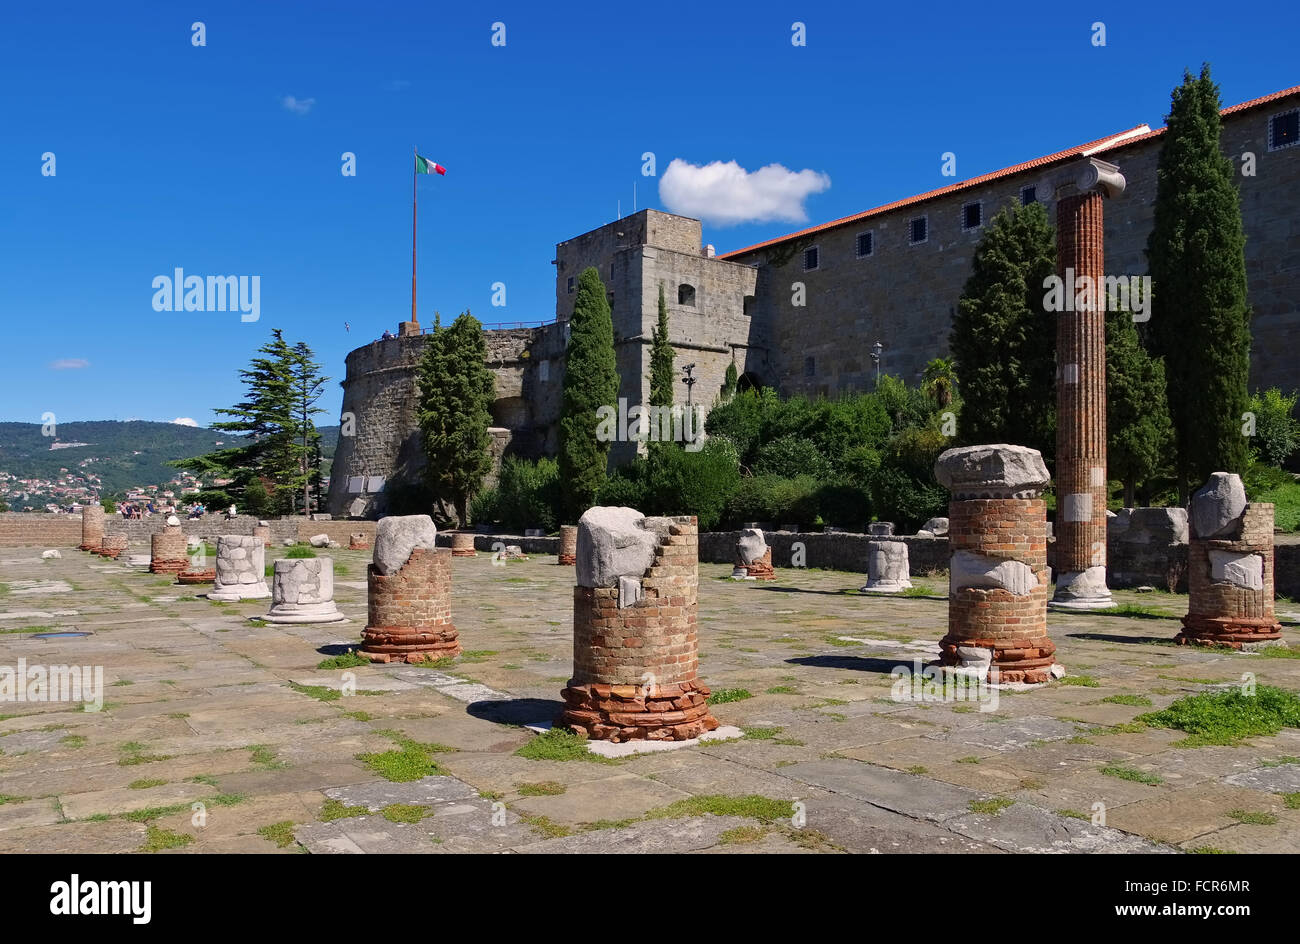 Triest in Italien, Burg und Forum - Trieste in Italy, the castle and roman forum Stock Photo